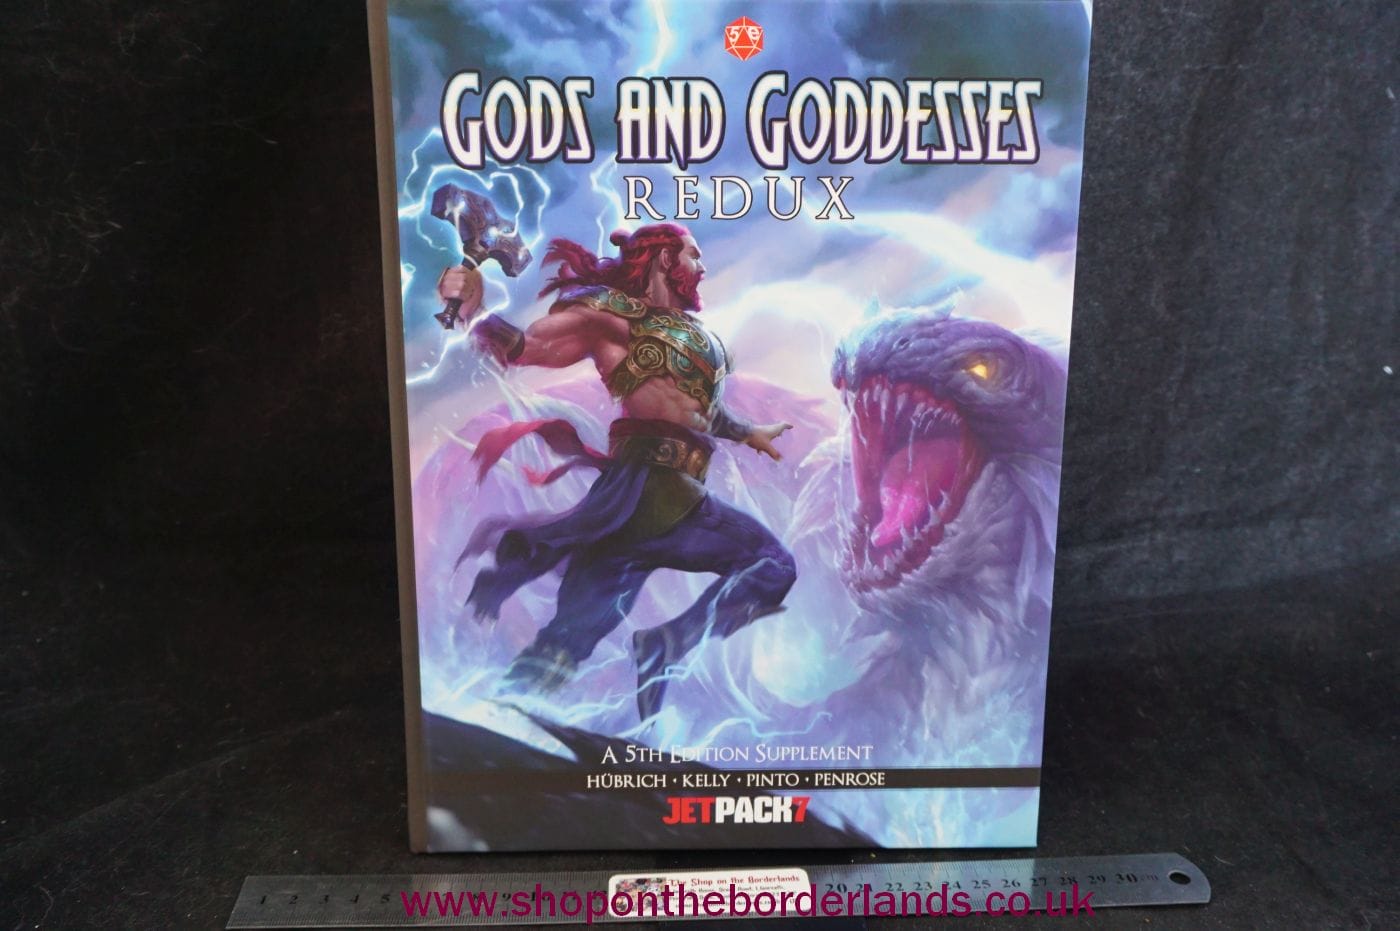 Gods And Goddesses Redux Hardback Supplement For Dandd 5th Edition The Shop On The Borderlands 